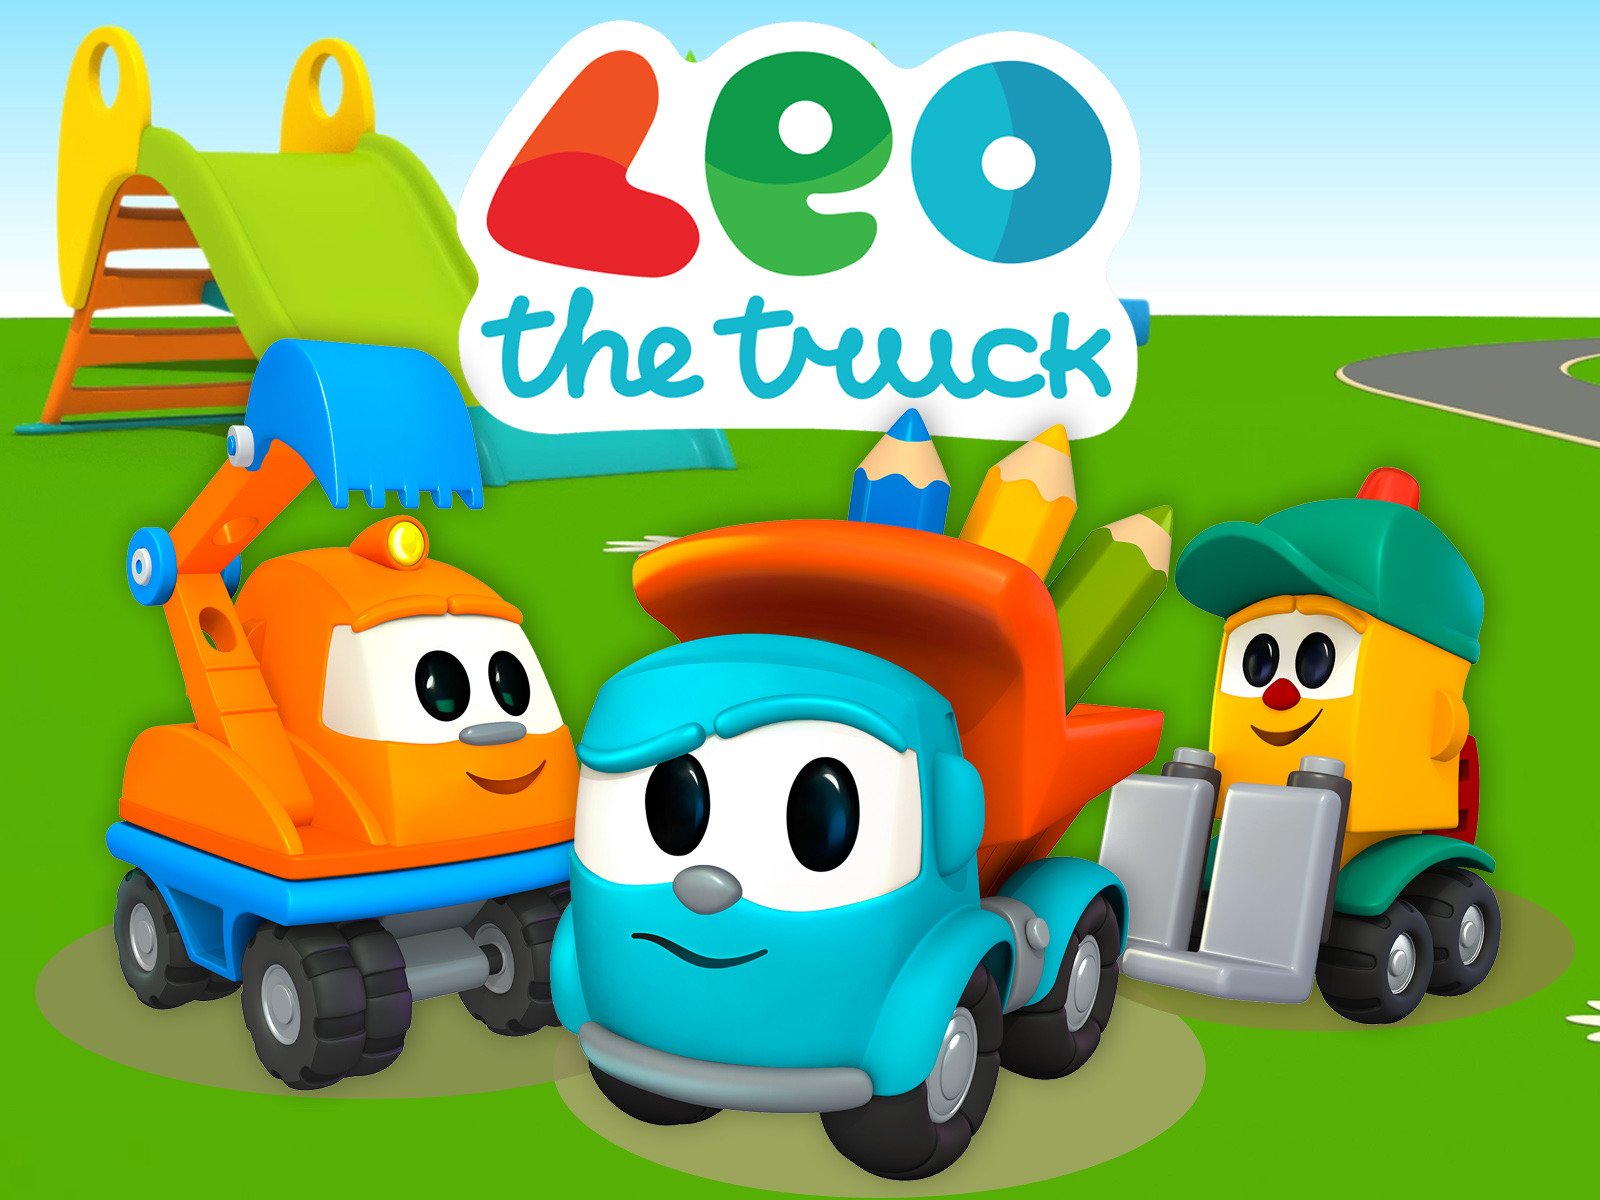 Leo the truck cartoon. A new house for Lea the truck. Car cartoons for  kids. 